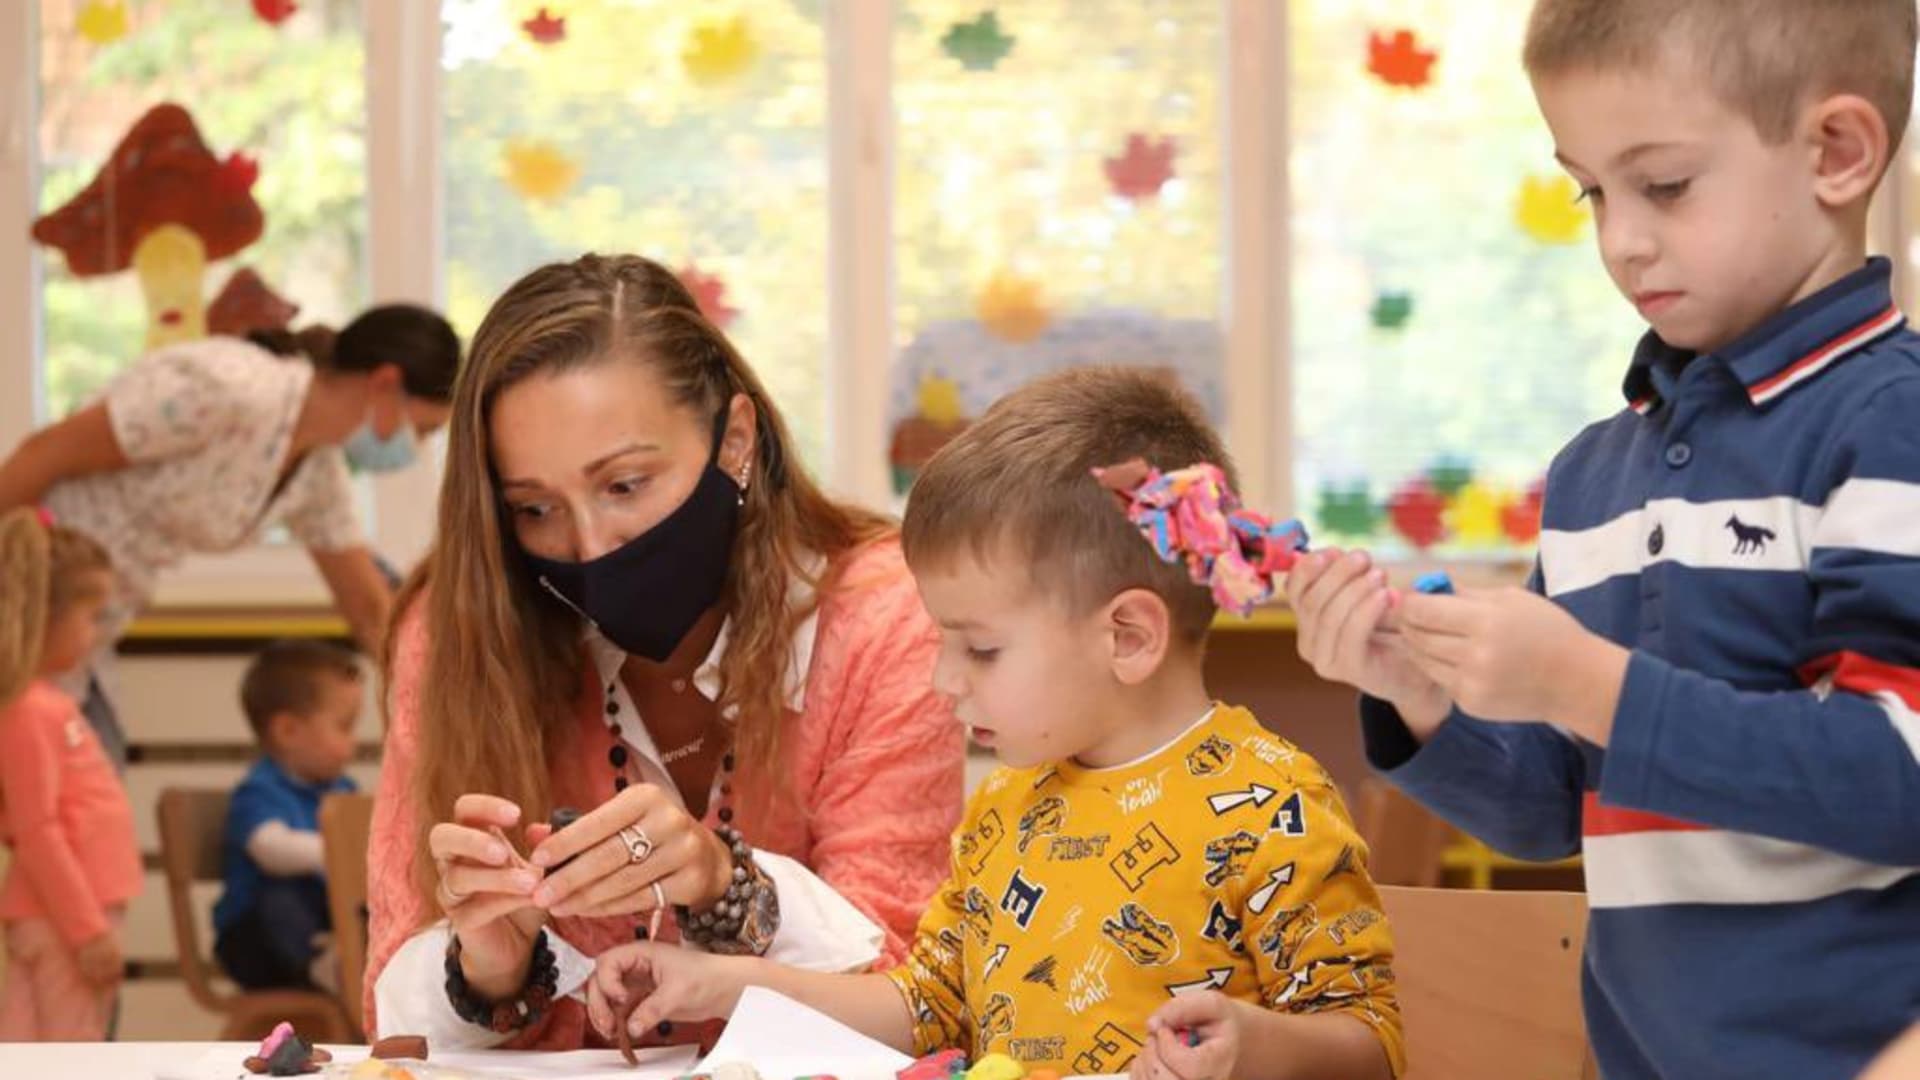 Jelena Djokovic and the Novak Djokovic Foundation celebrate opening of new kindergarten in Serbia